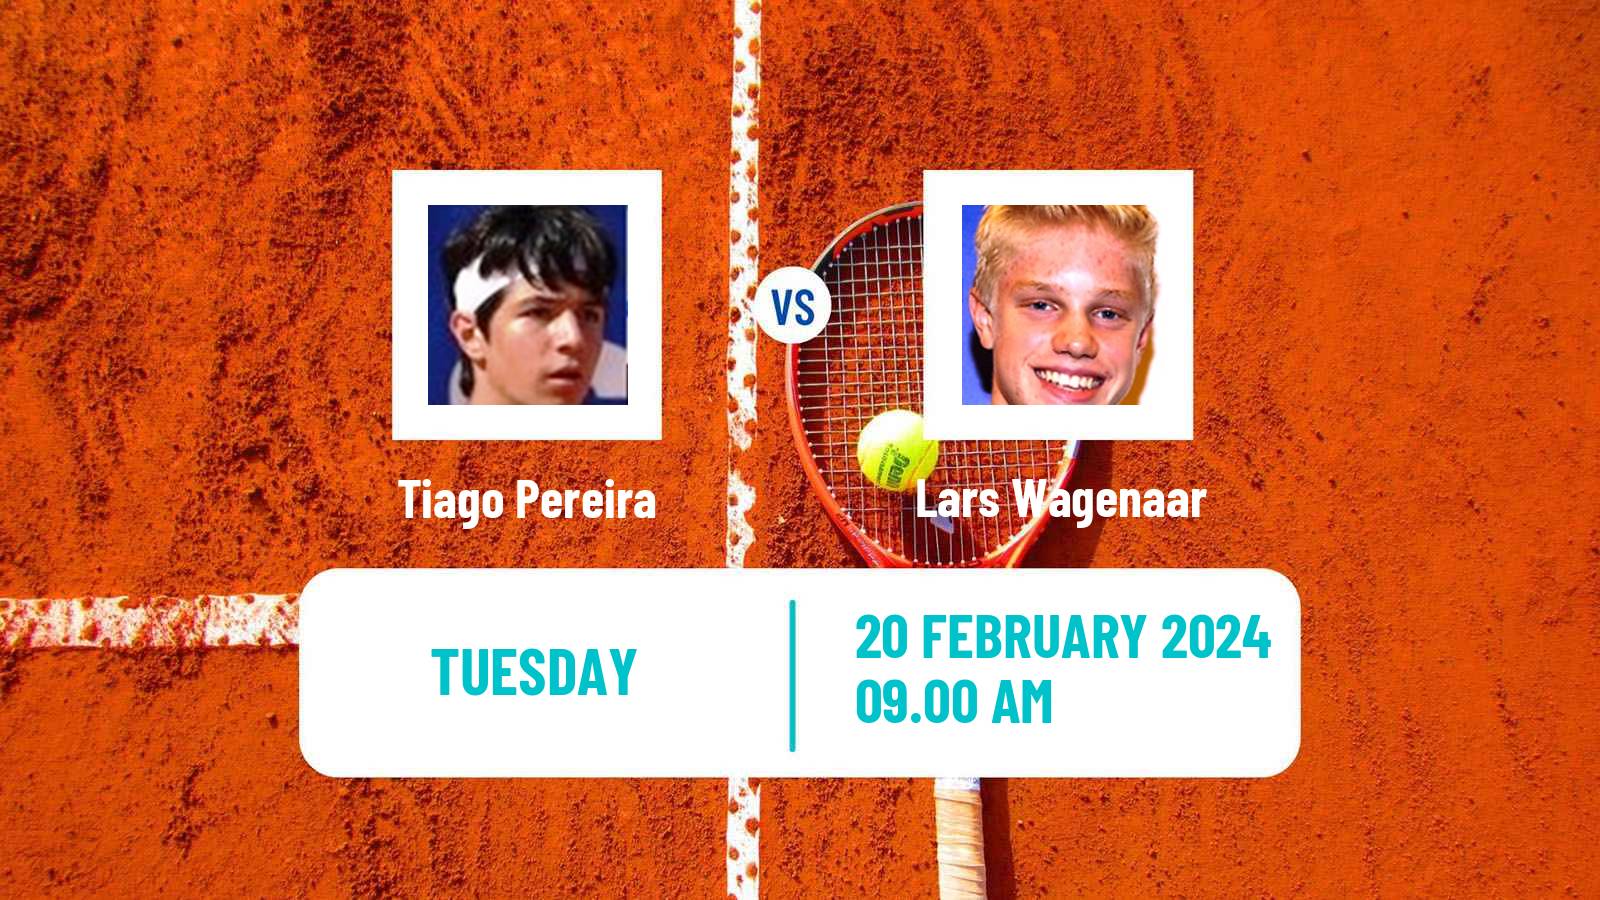 Tennis ITF M25 Vila Real De Santo Antonio 2 Men Tiago Pereira - Lars Wagenaar